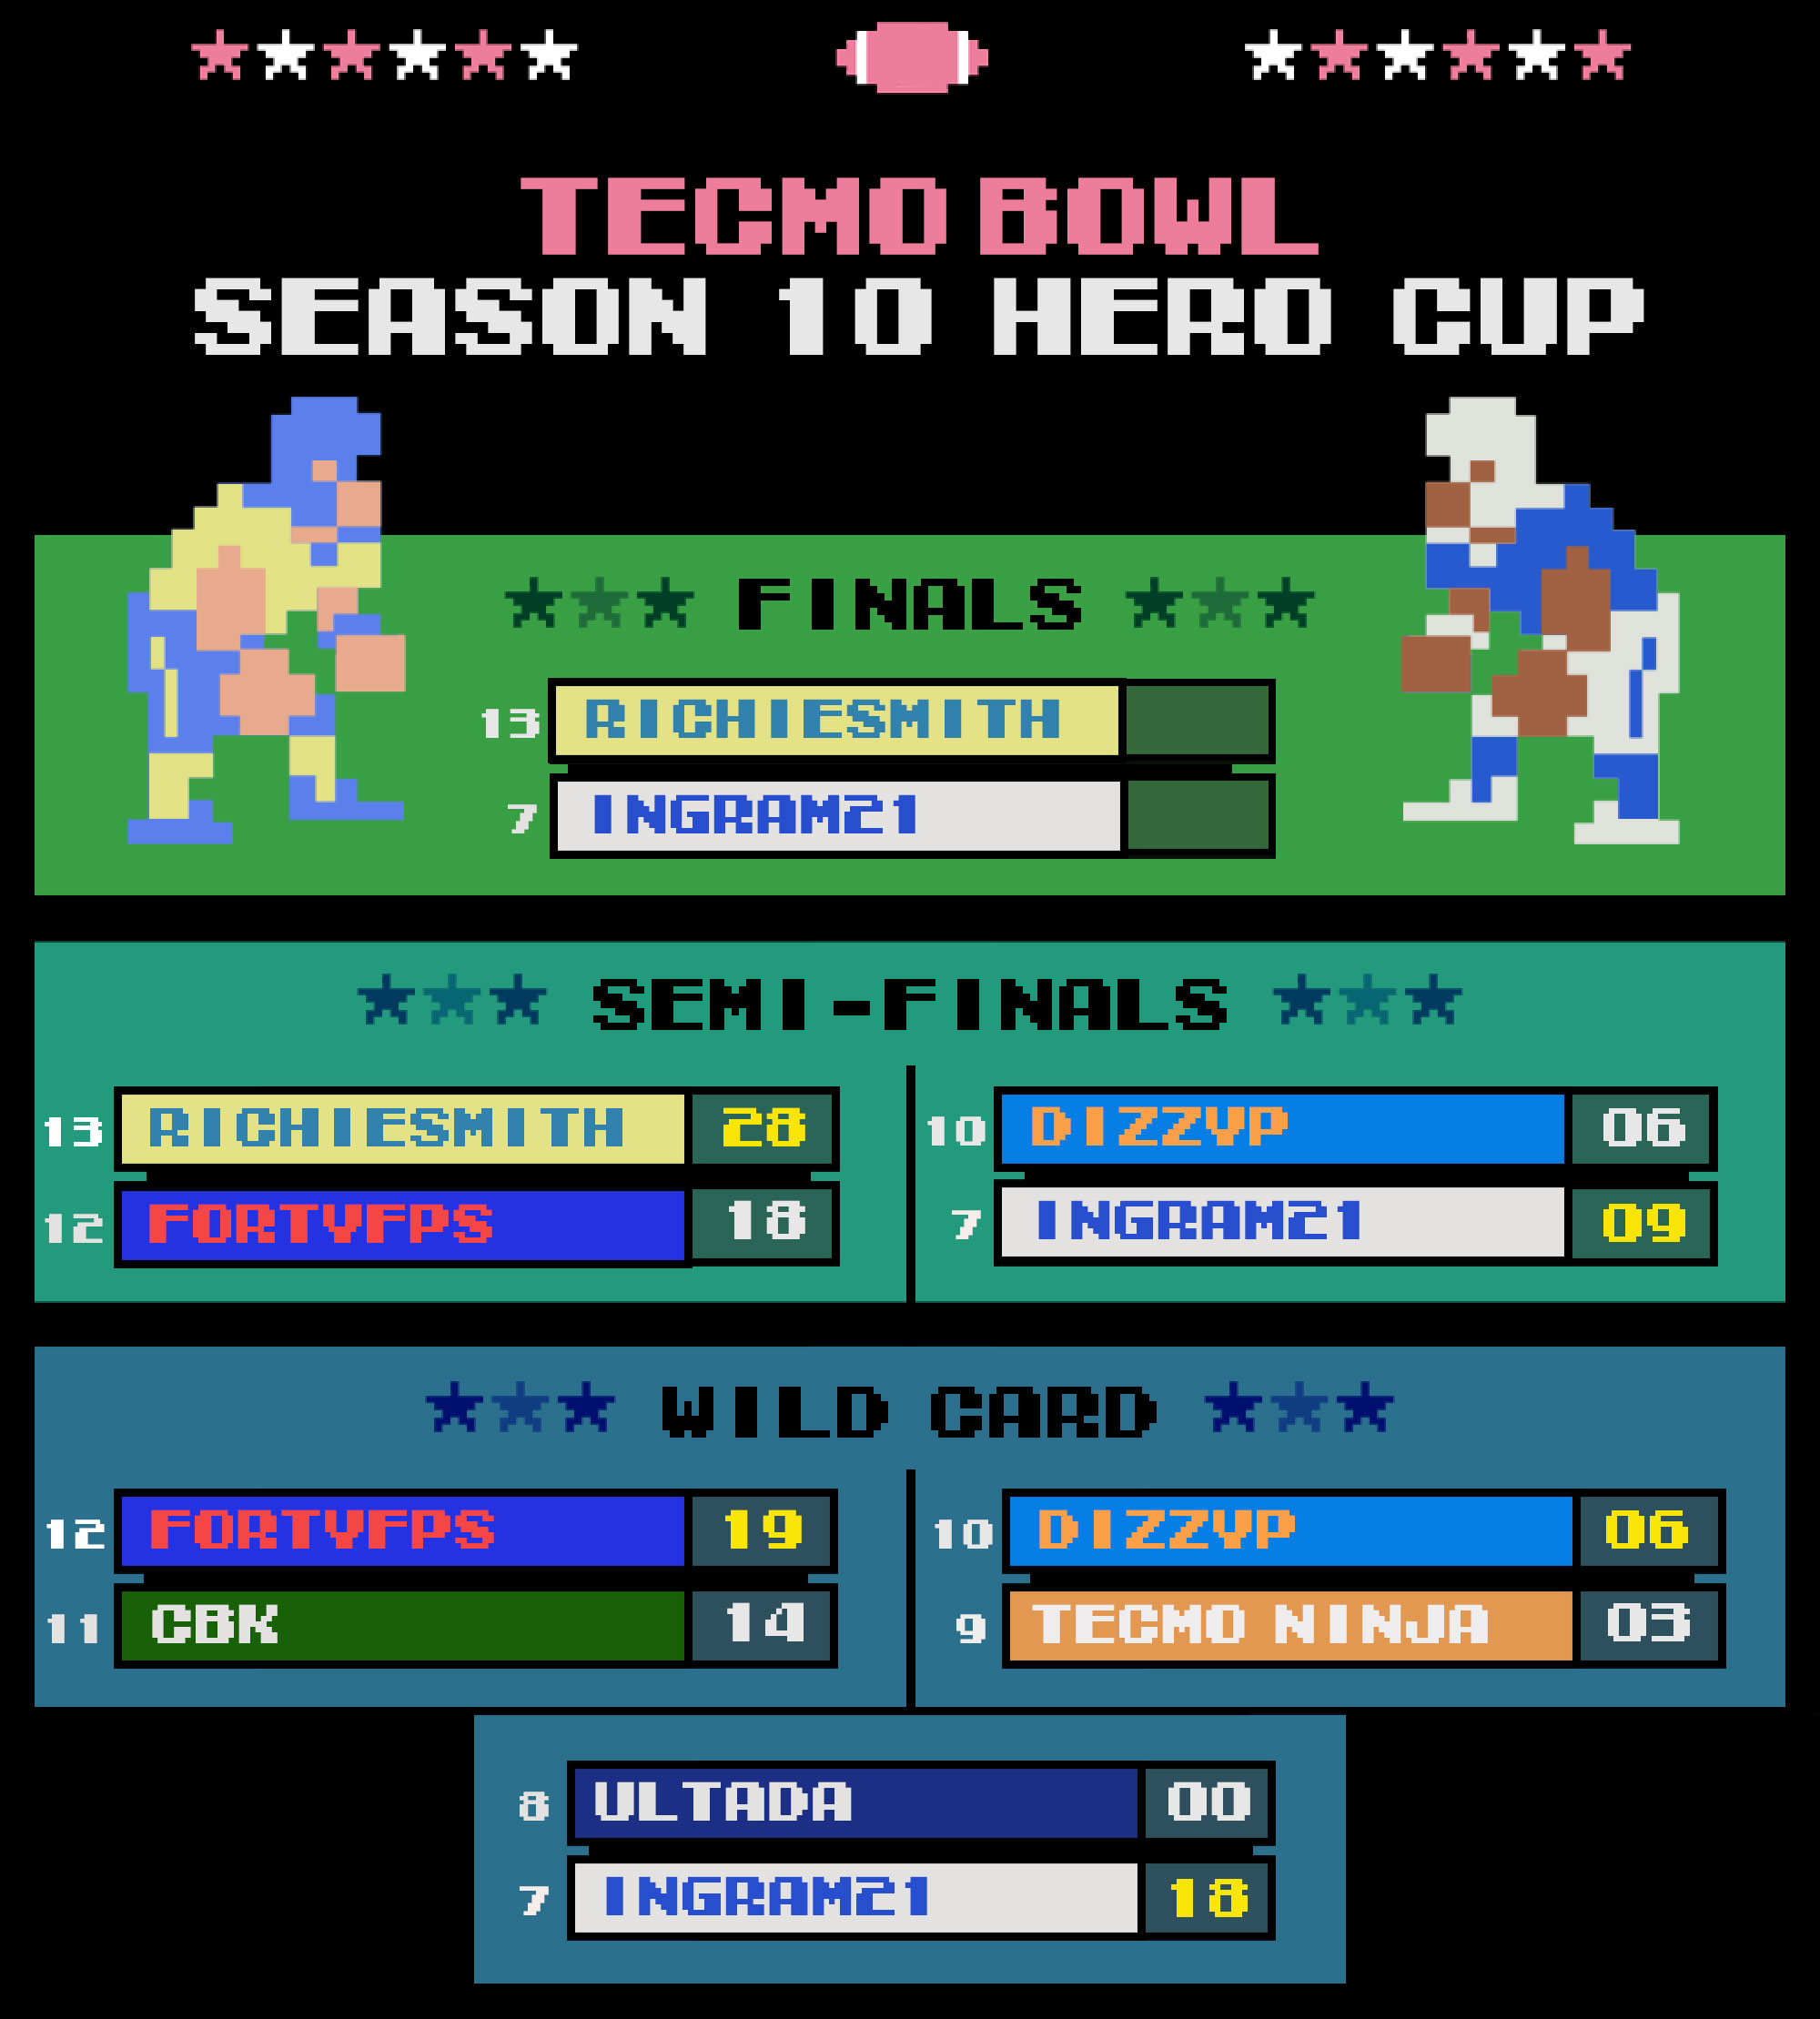 Season 10 Hero Cup | Tecmo Bowl League